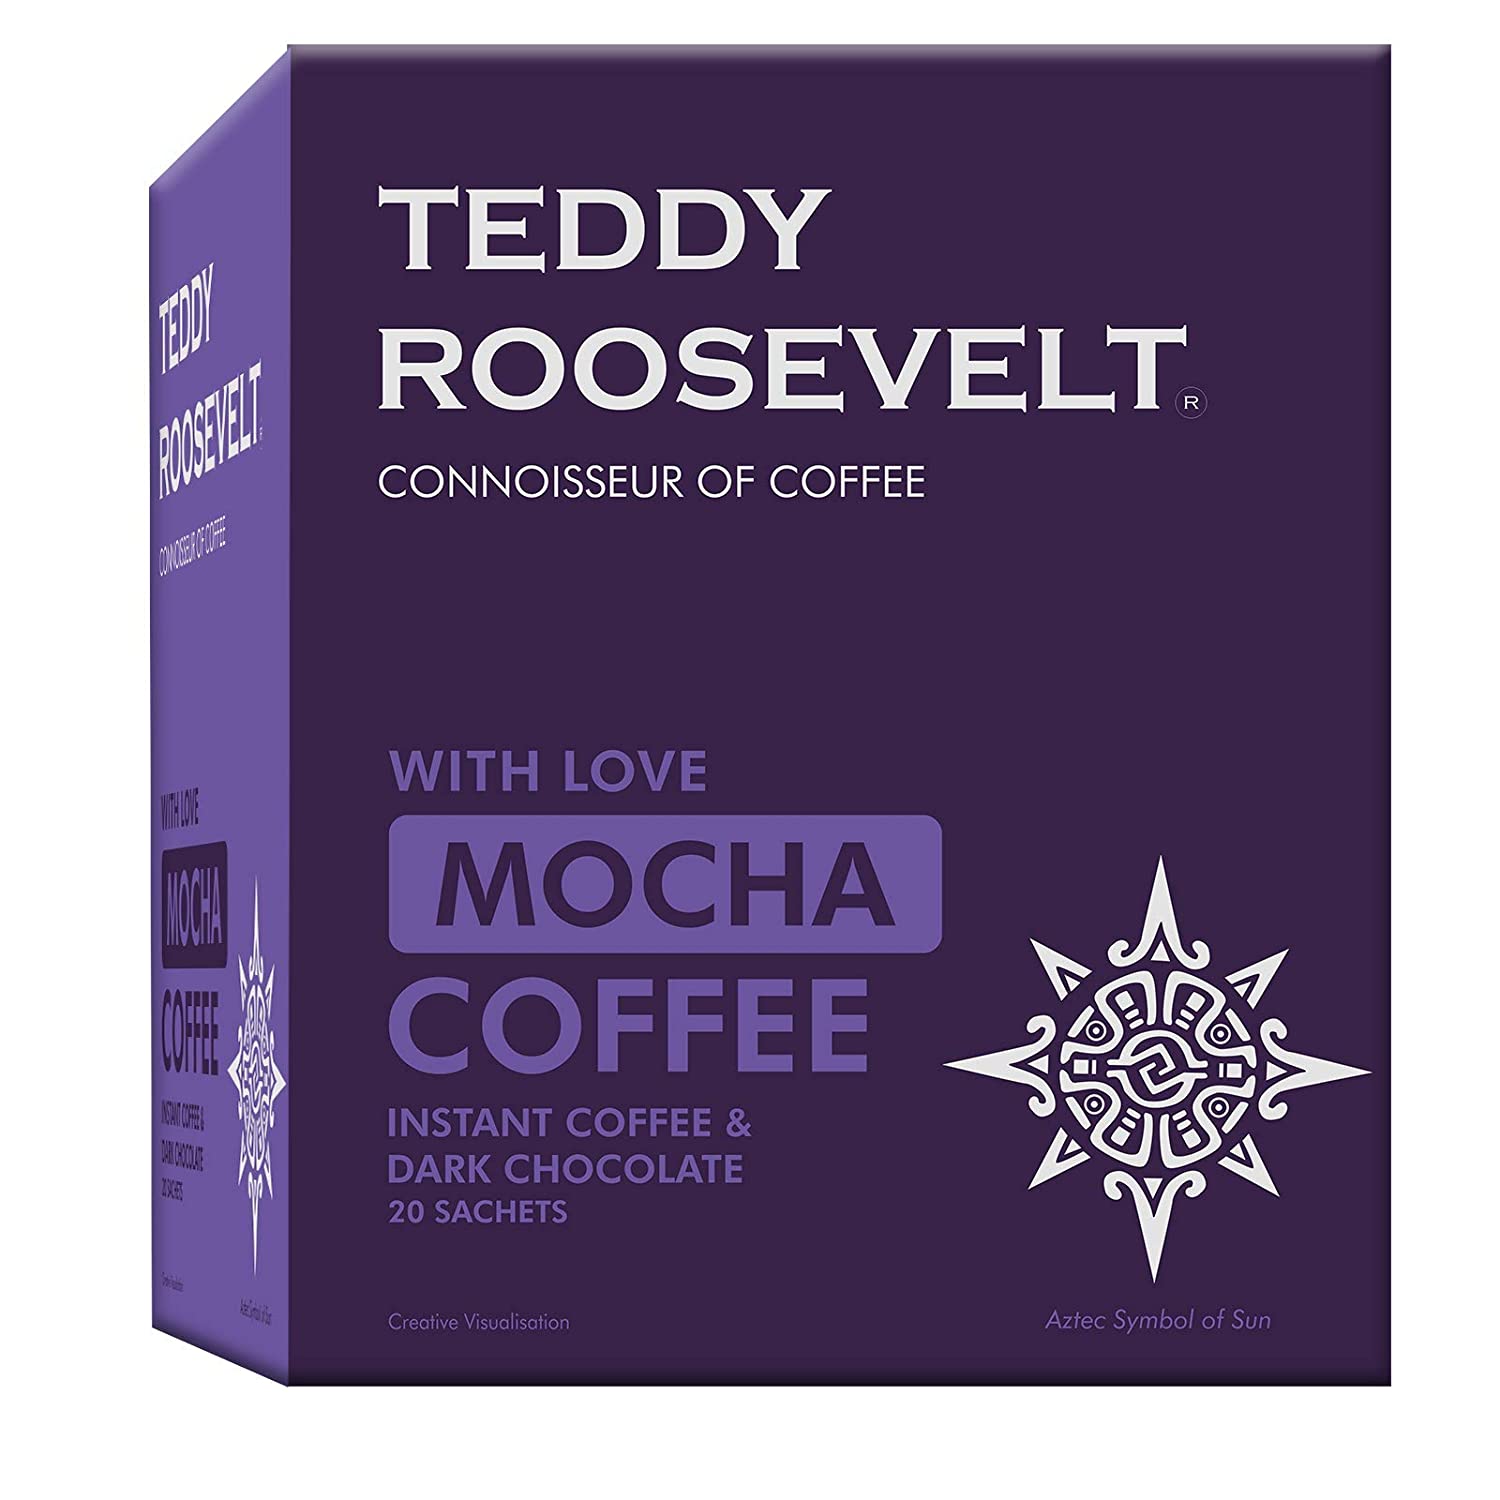 Teddy Roosevelt Instant Dark Mocha Coffee 20 Sachets - 50g